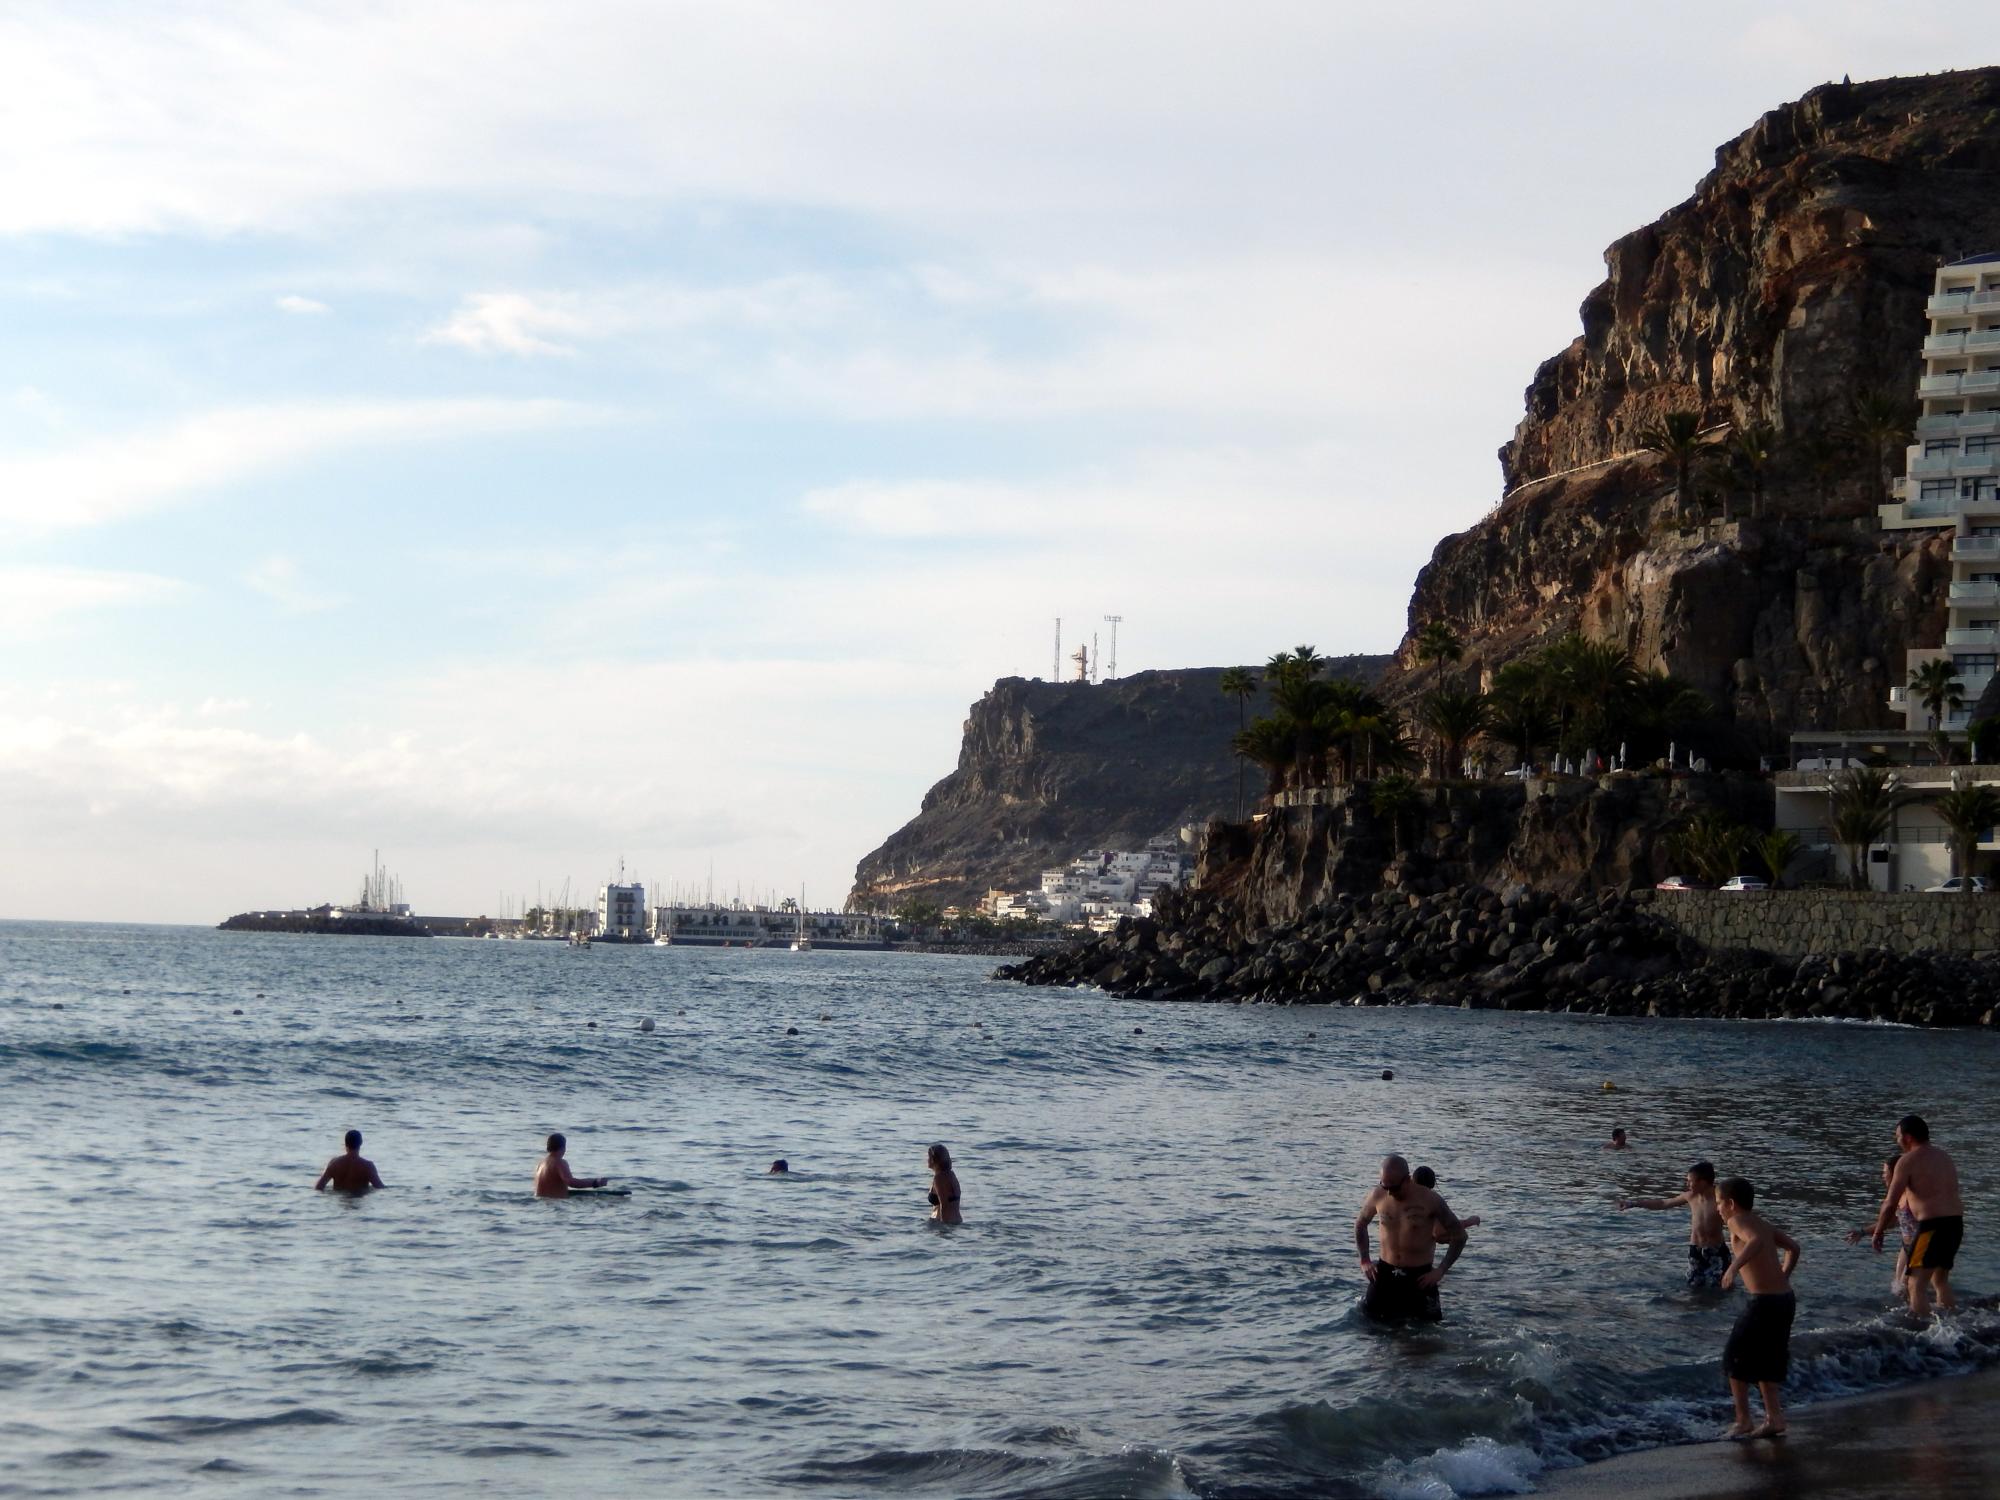  Canary Islands - Dusk Bathing